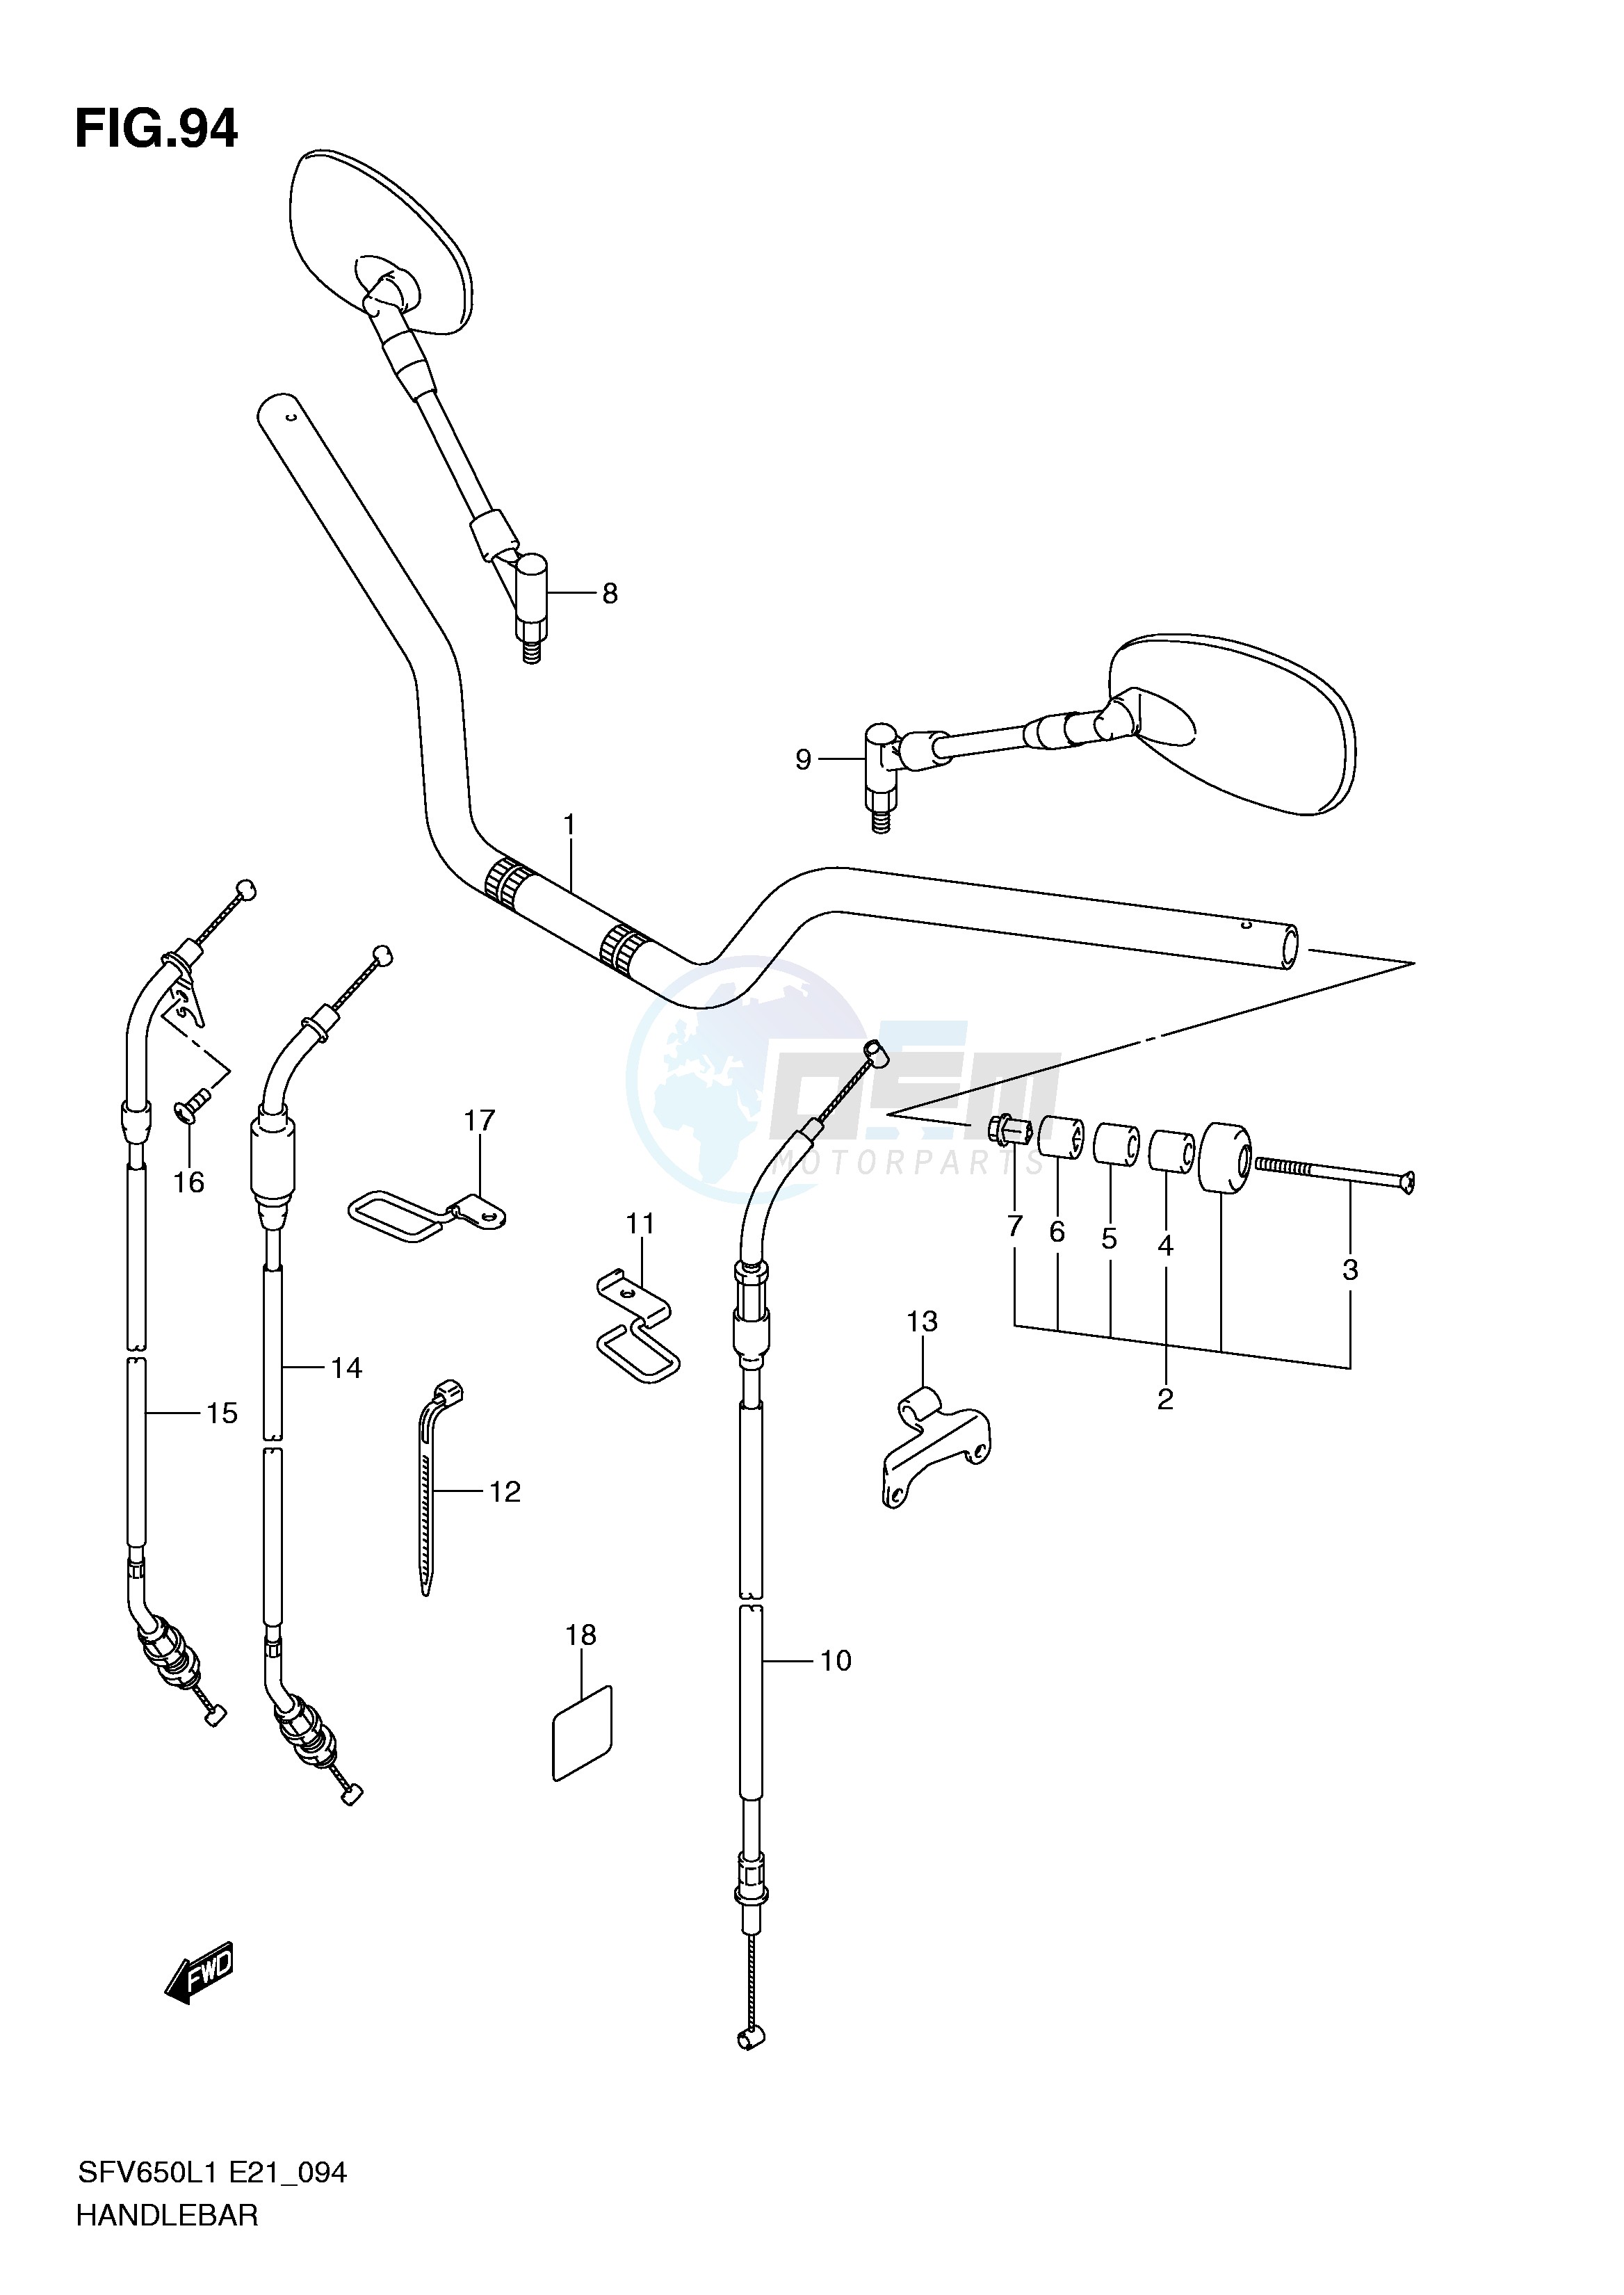 HANDLEBAR (SFV650UAL1 E21) blueprint